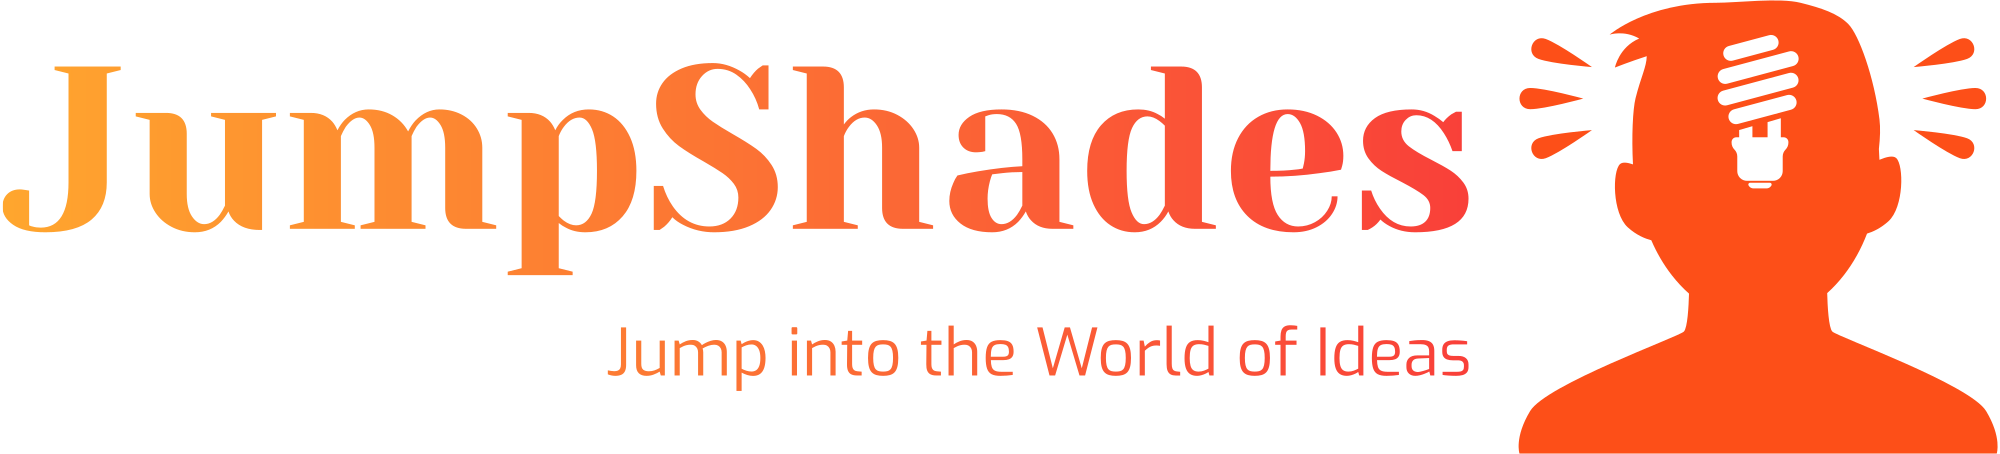 JumpShades Logo